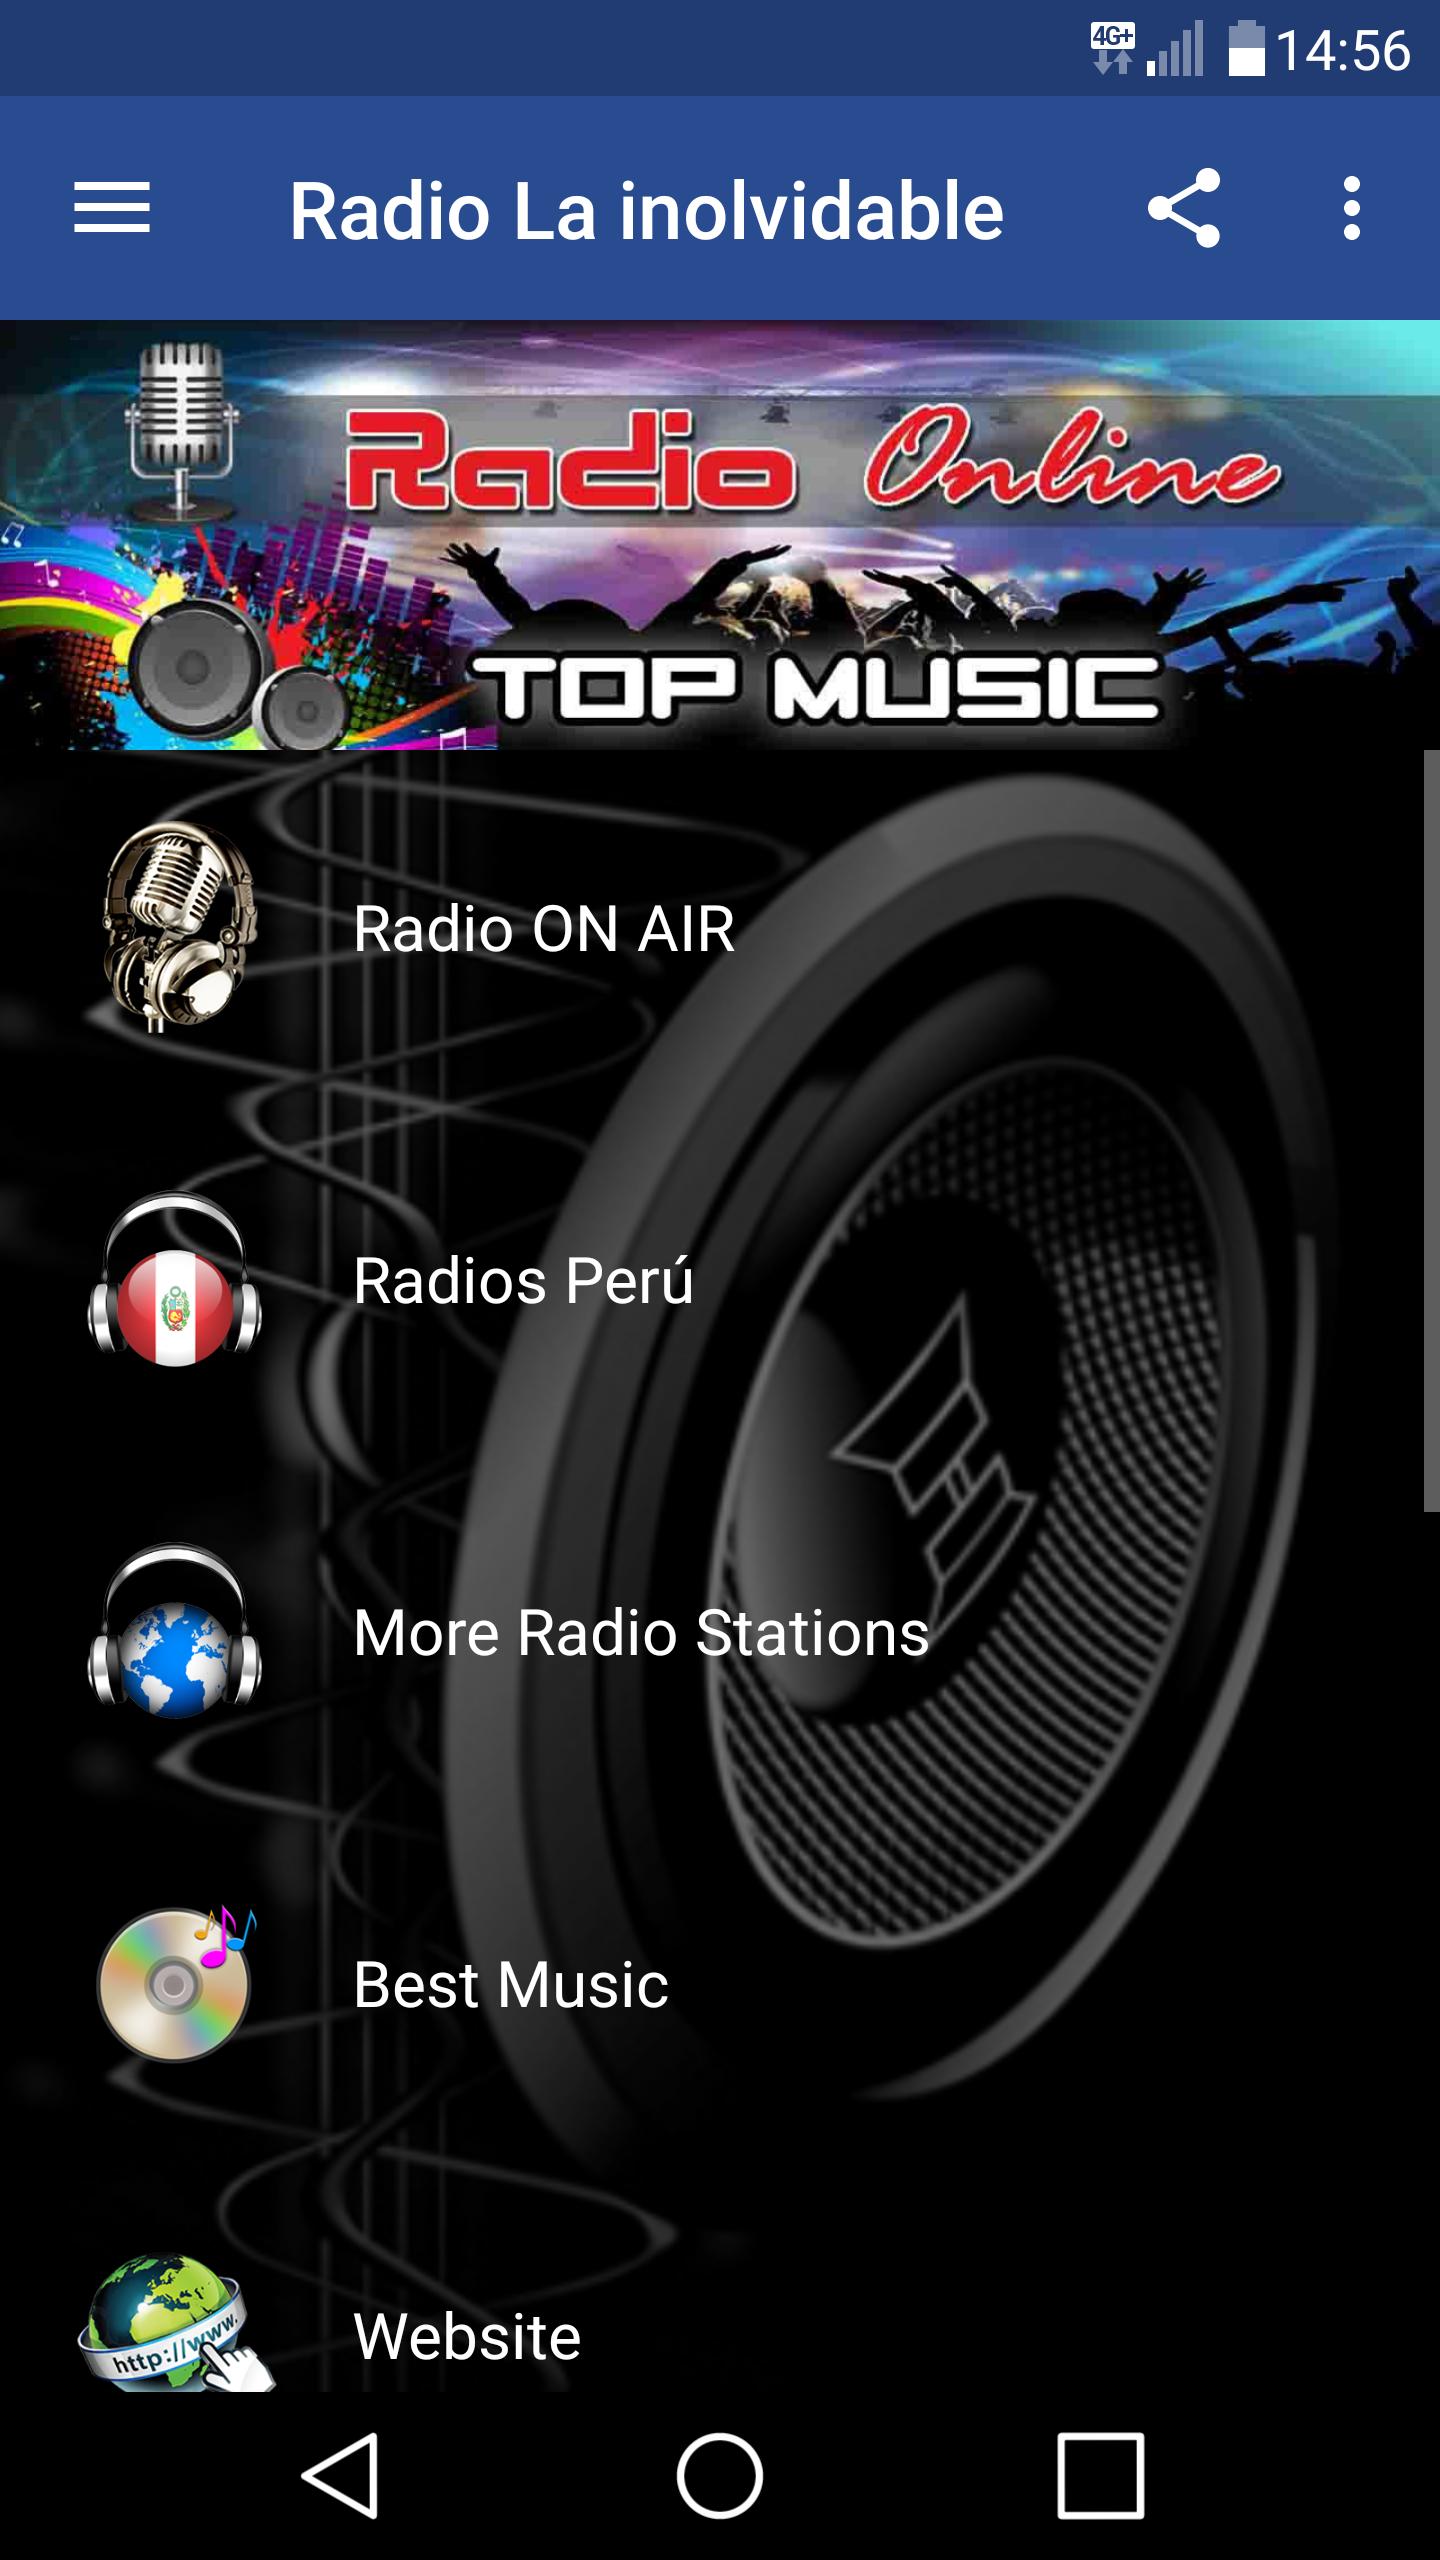 Radio La Inolvidable for Android - APK Download